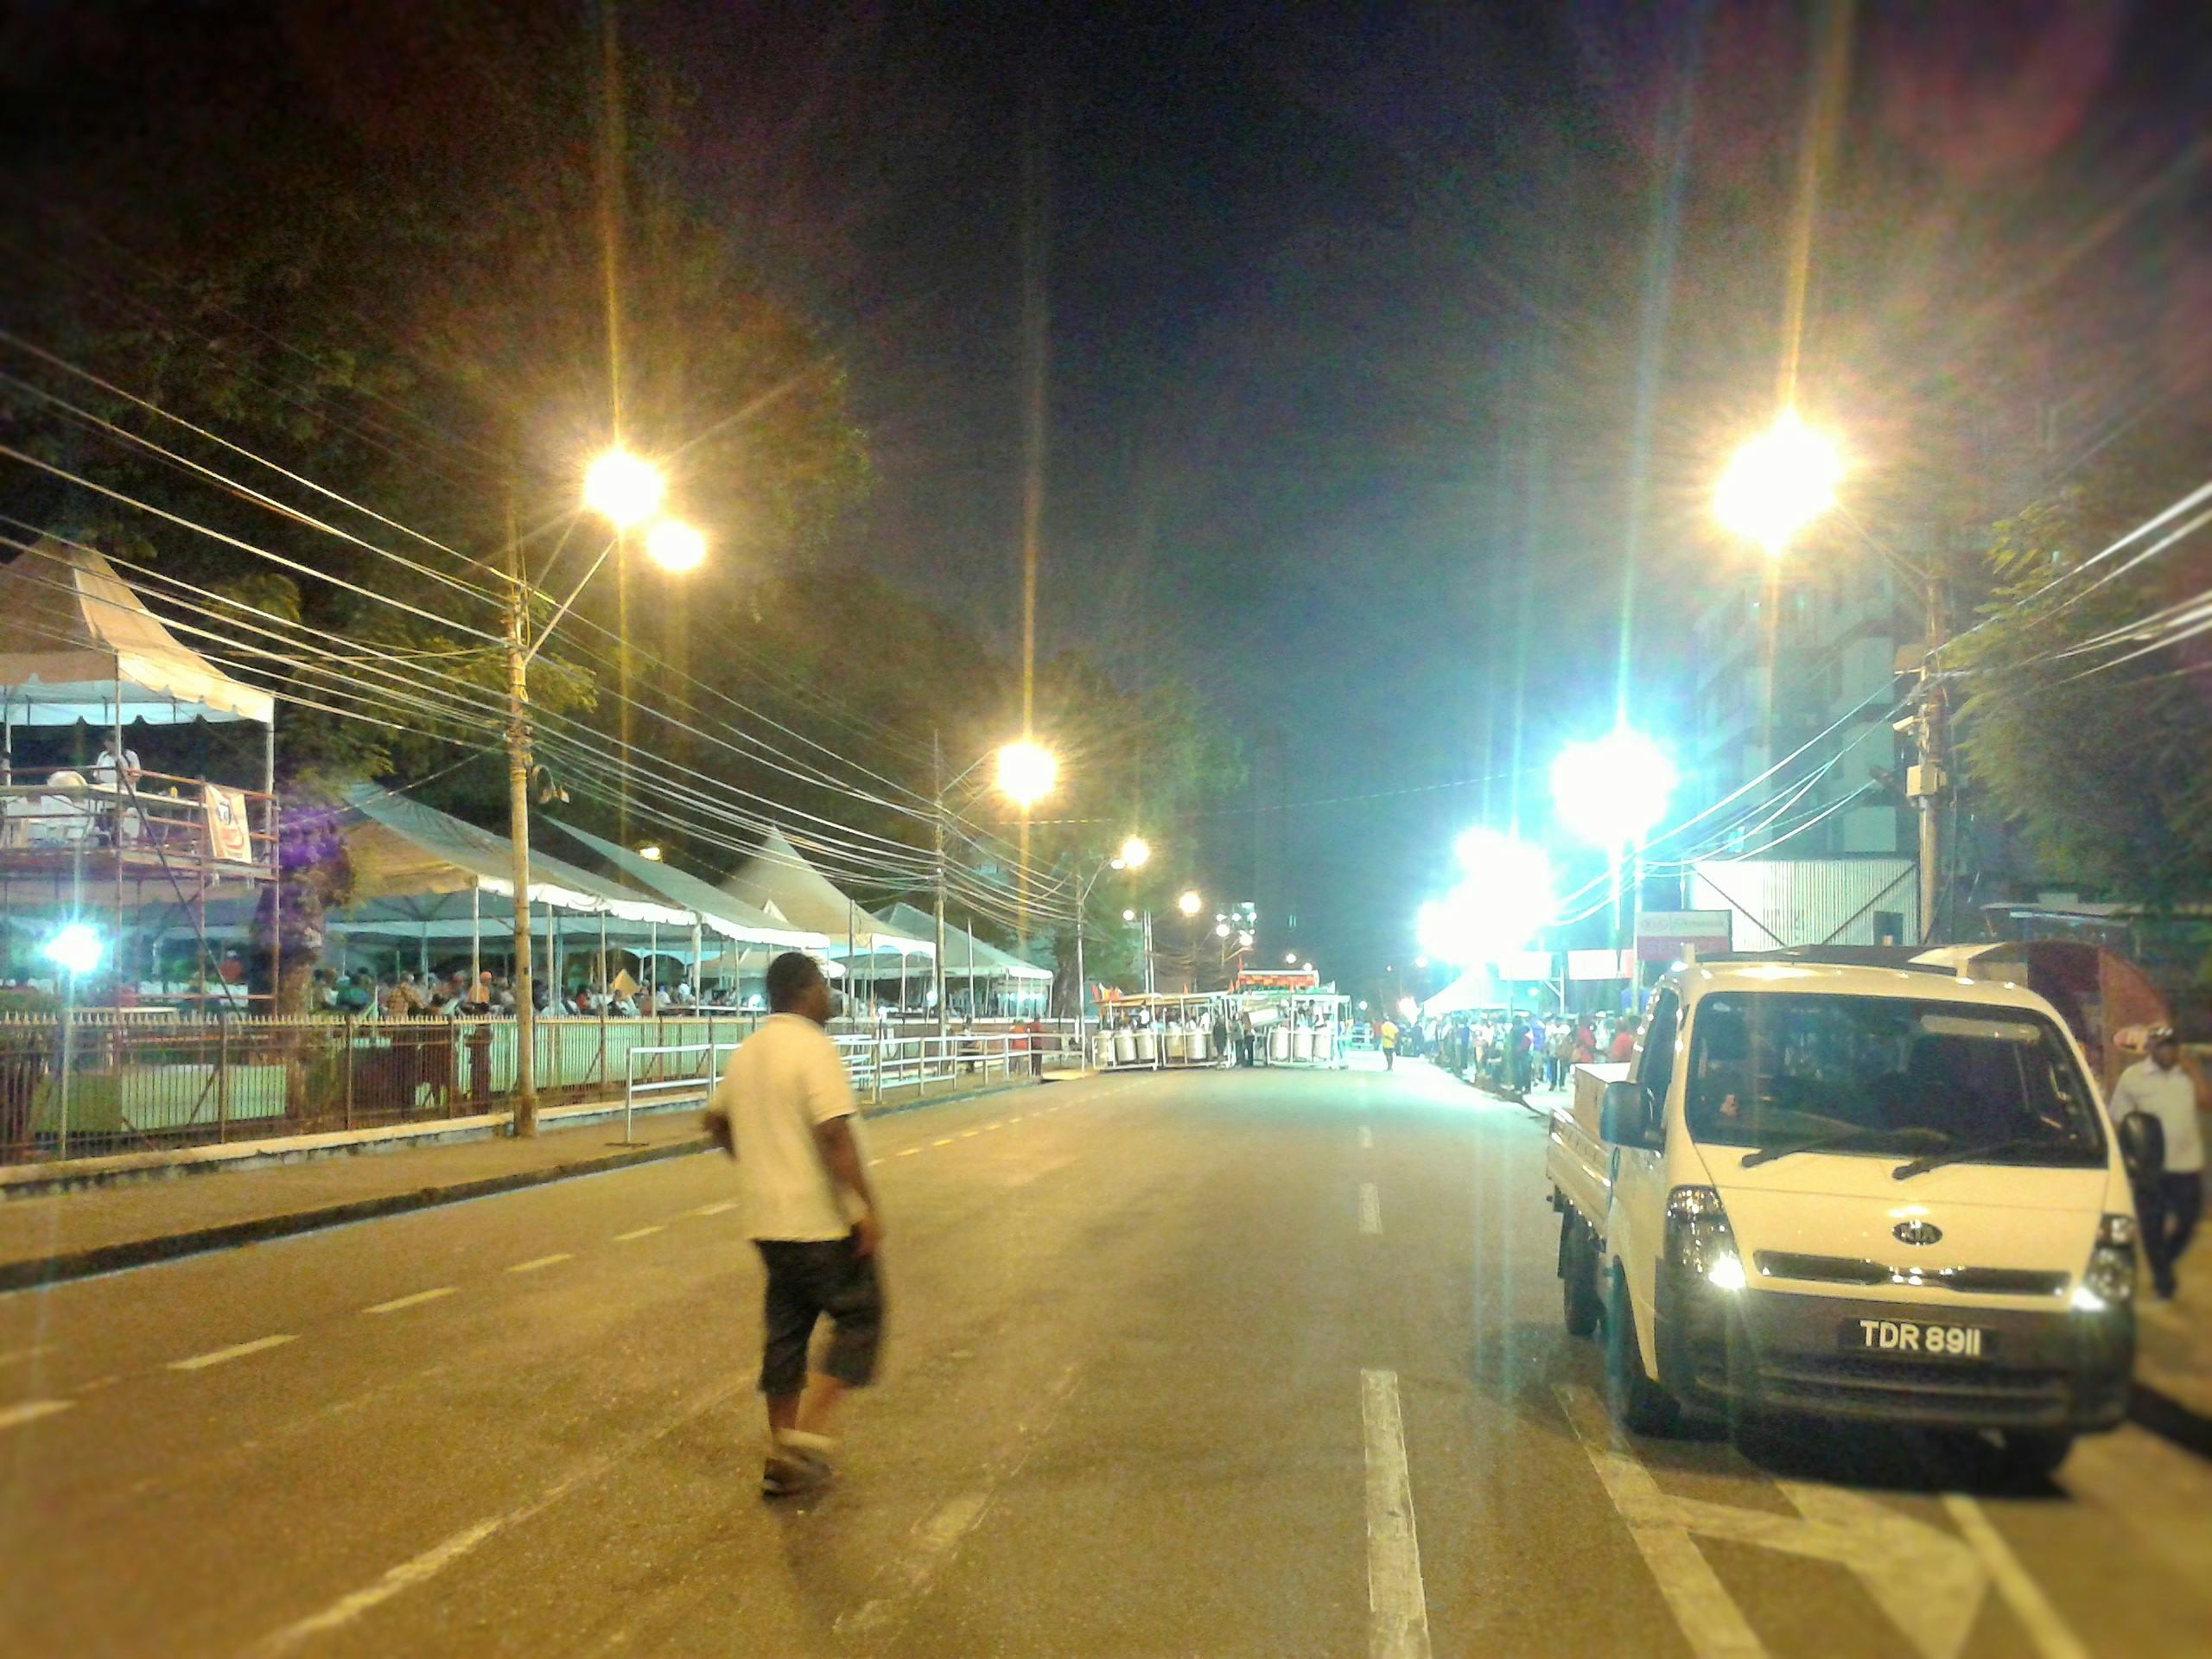 Free stock photo of Carnival Panorama street lights